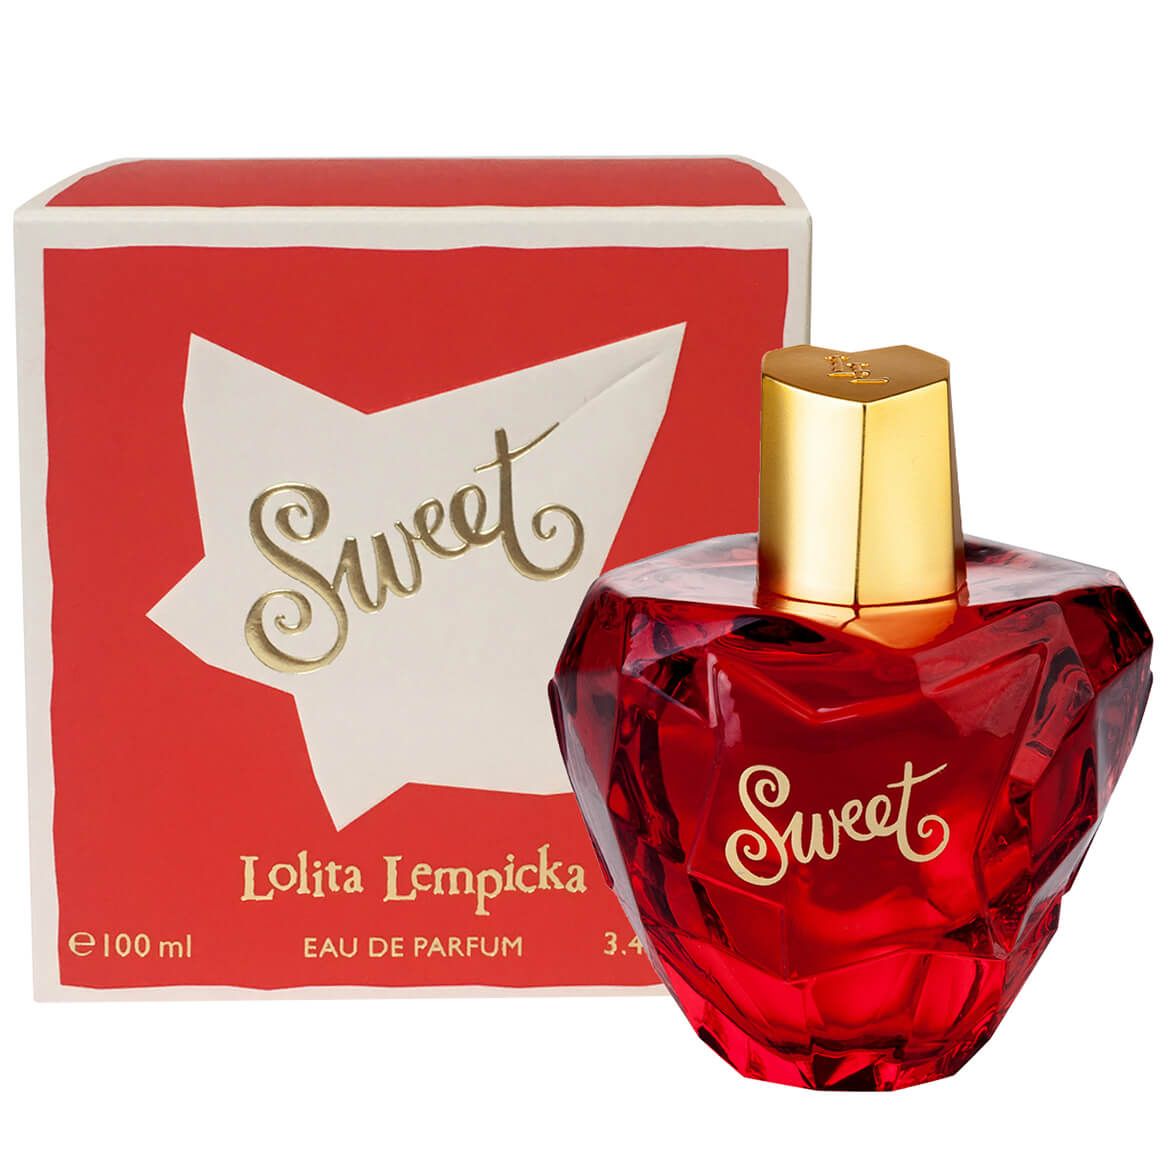 Lolita Lempicka Sweet for Women EDP, 3.4 fl. oz. + '-' + 377294